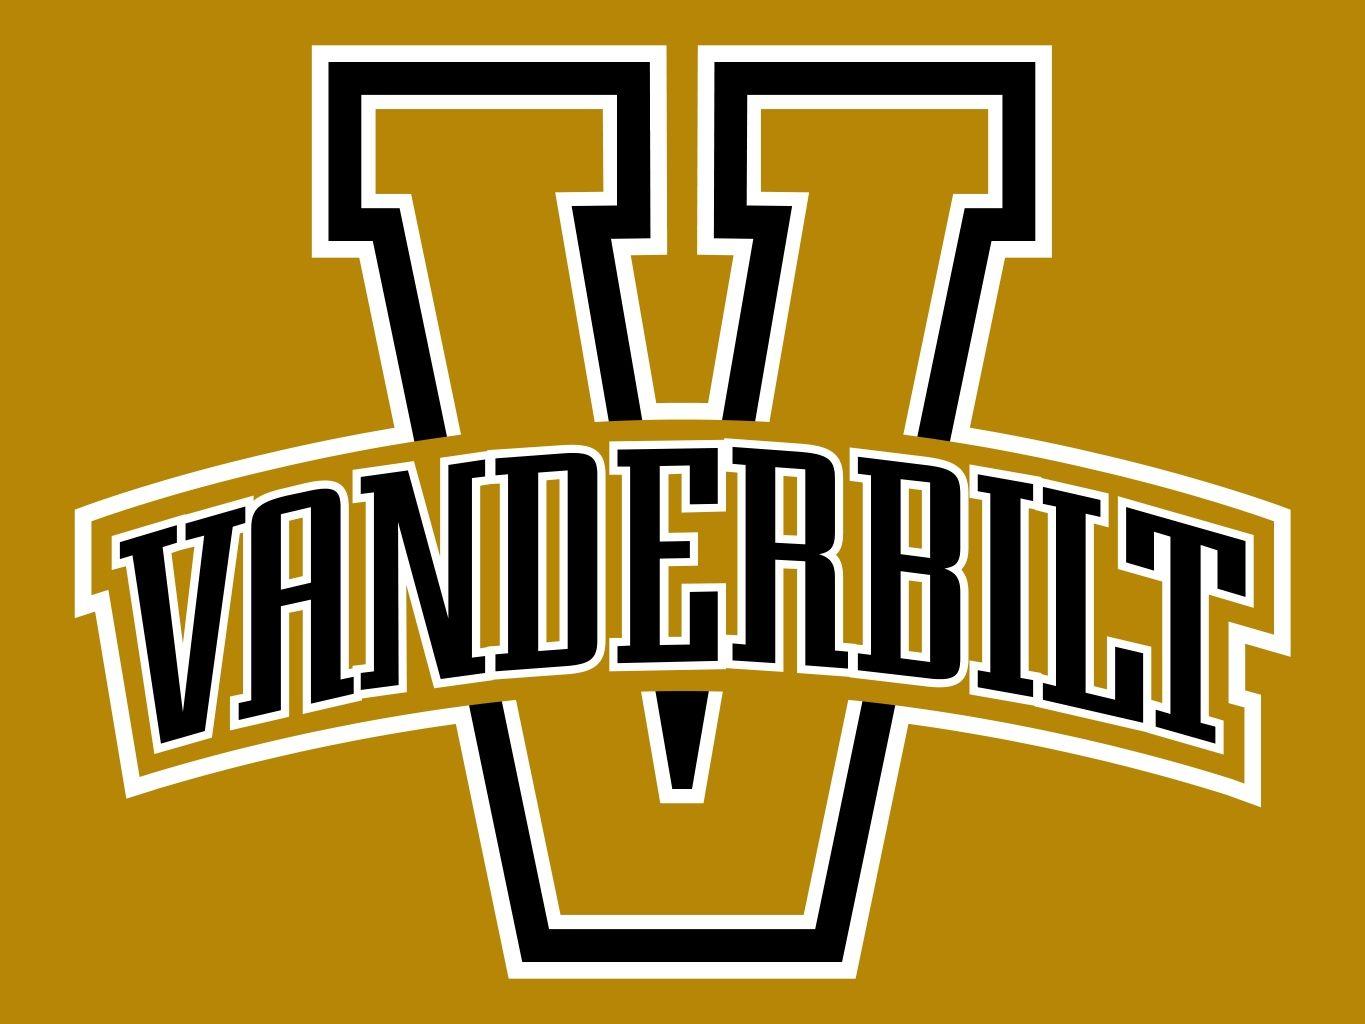 Vanderbilt University Logo - Vanderbilt University is a private research university located